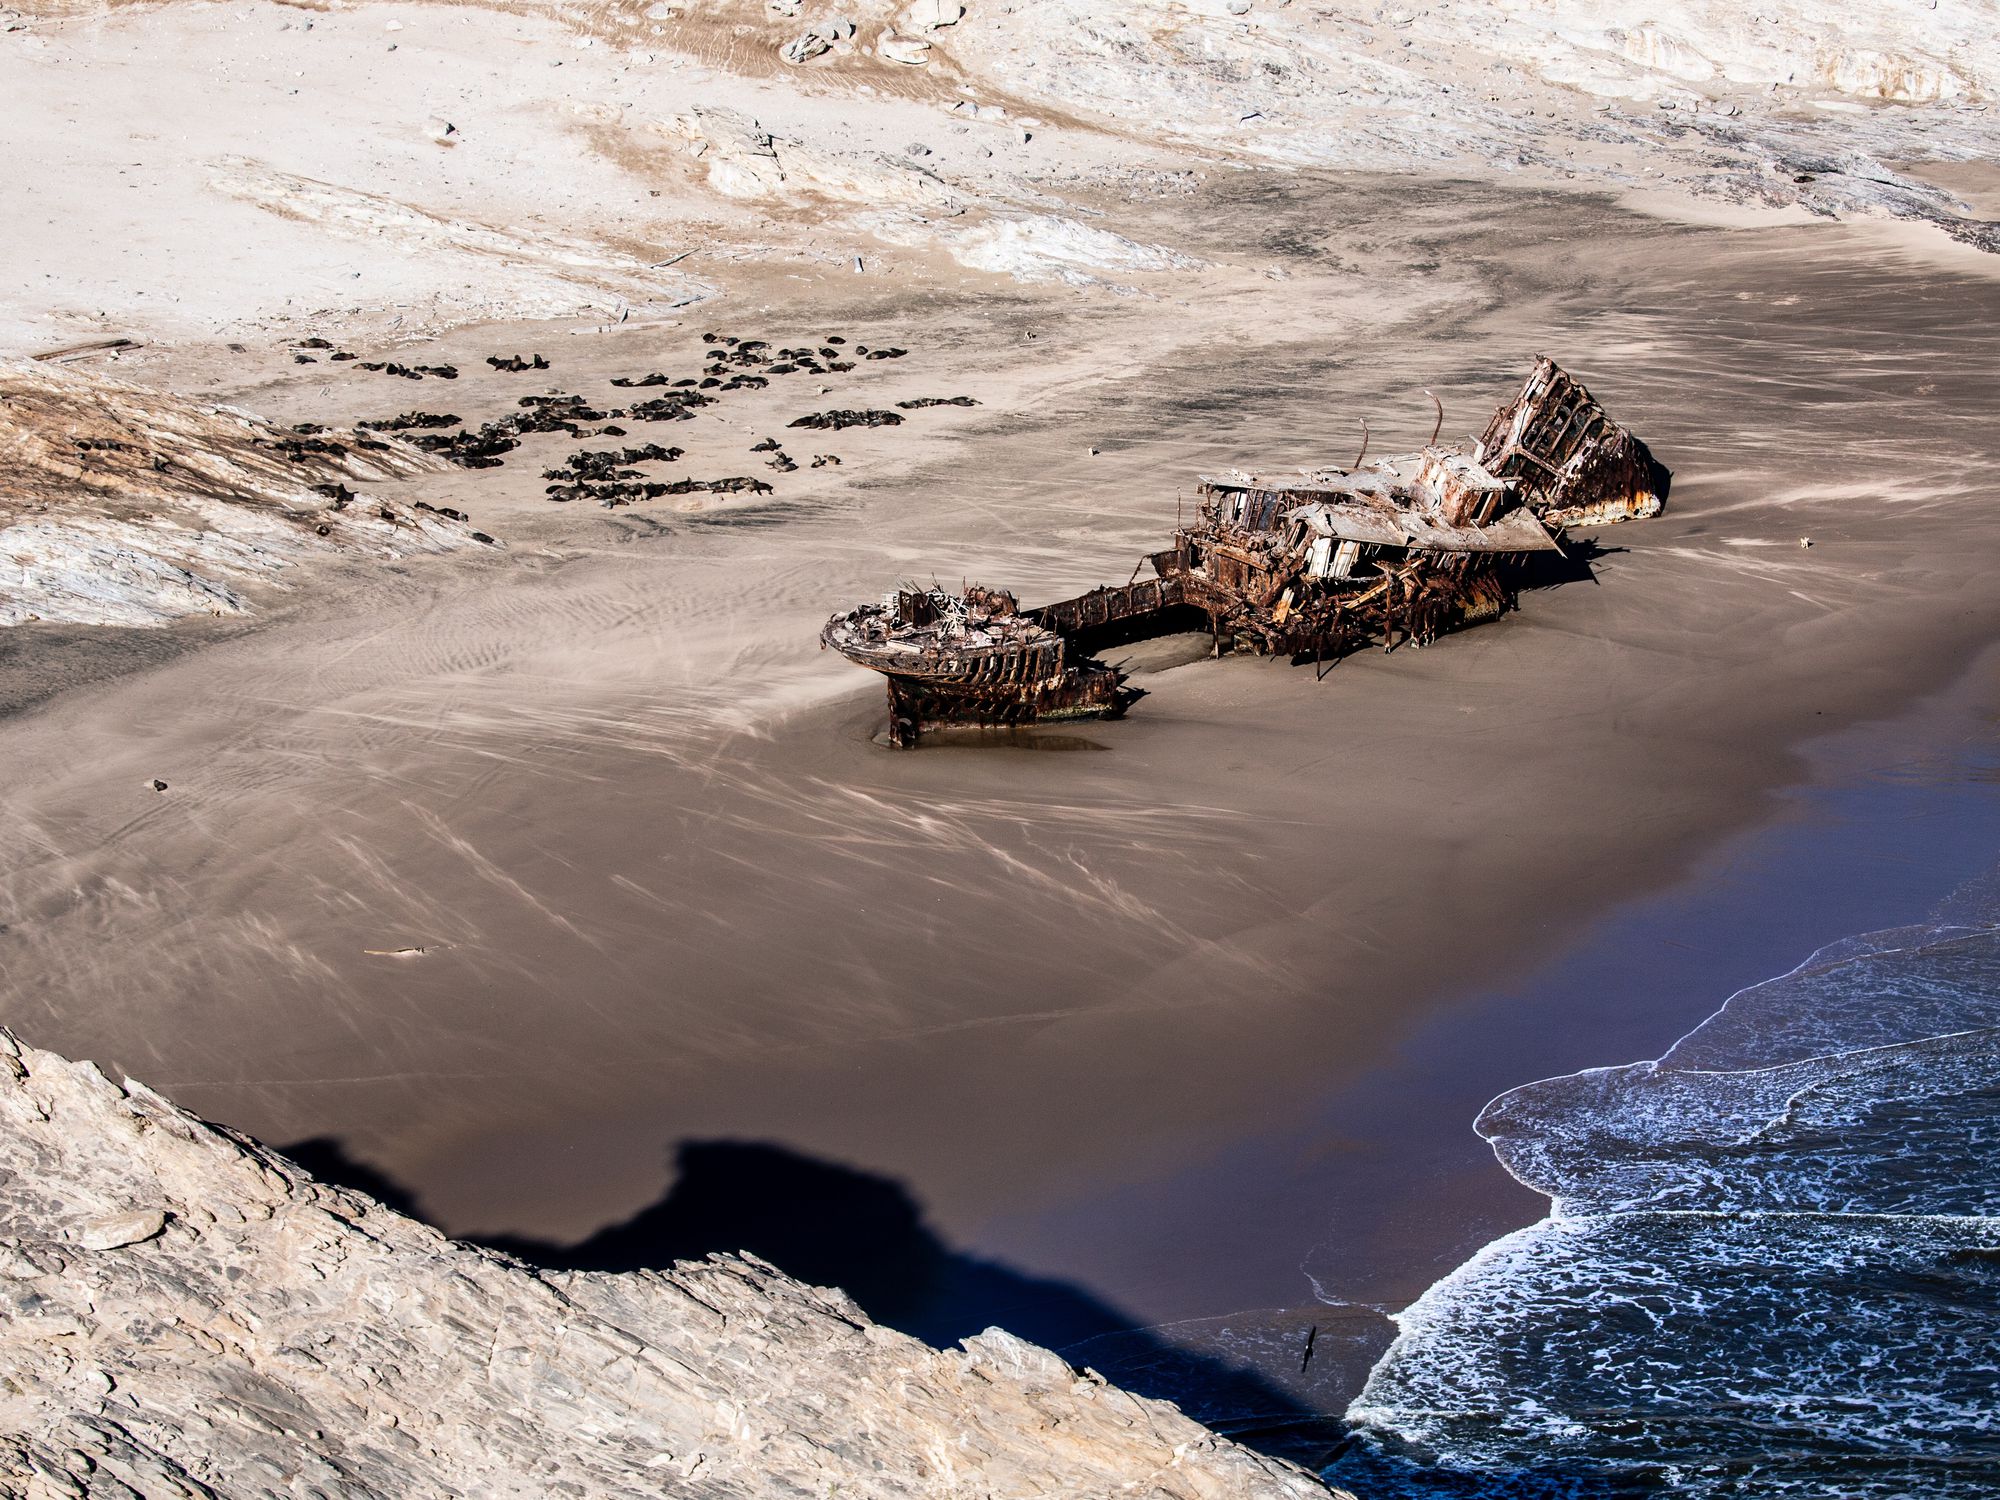 Otavi shipwreck, Spencer Bay, Sperrgebiet, Namibia